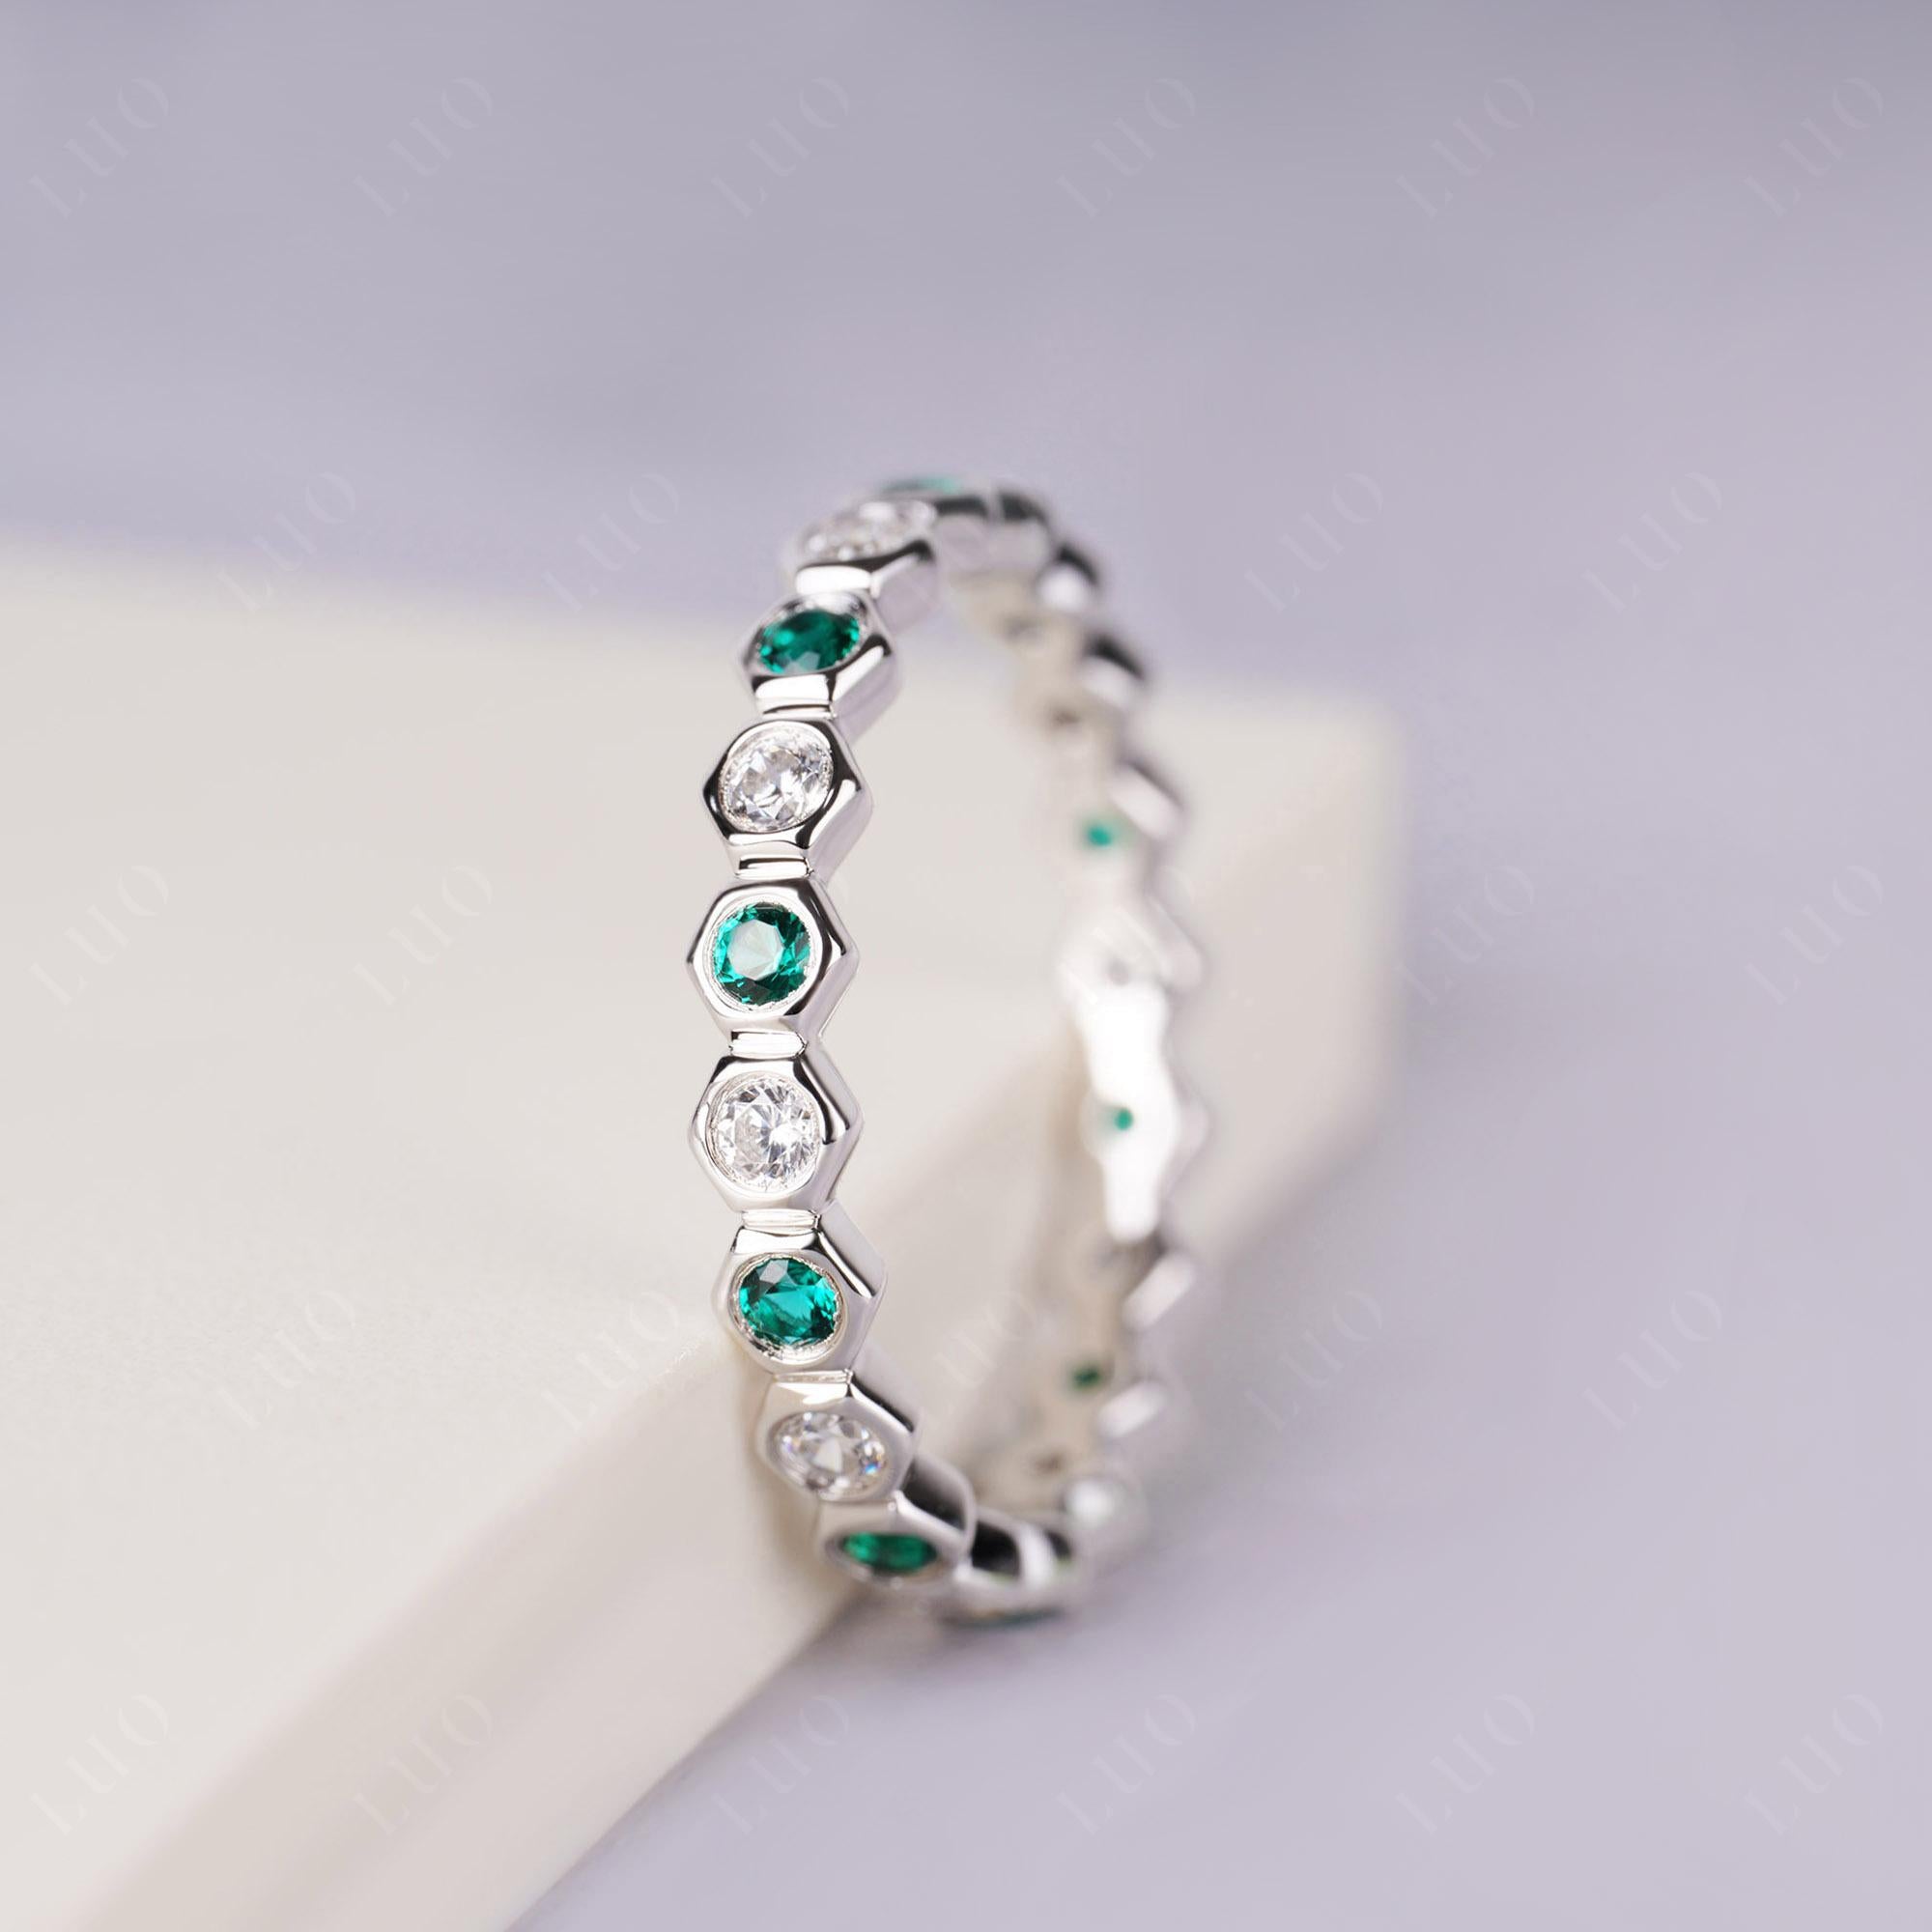 Cubic Zirconia and Emerald Hexagon Wedding Ring | LUO Jewelry